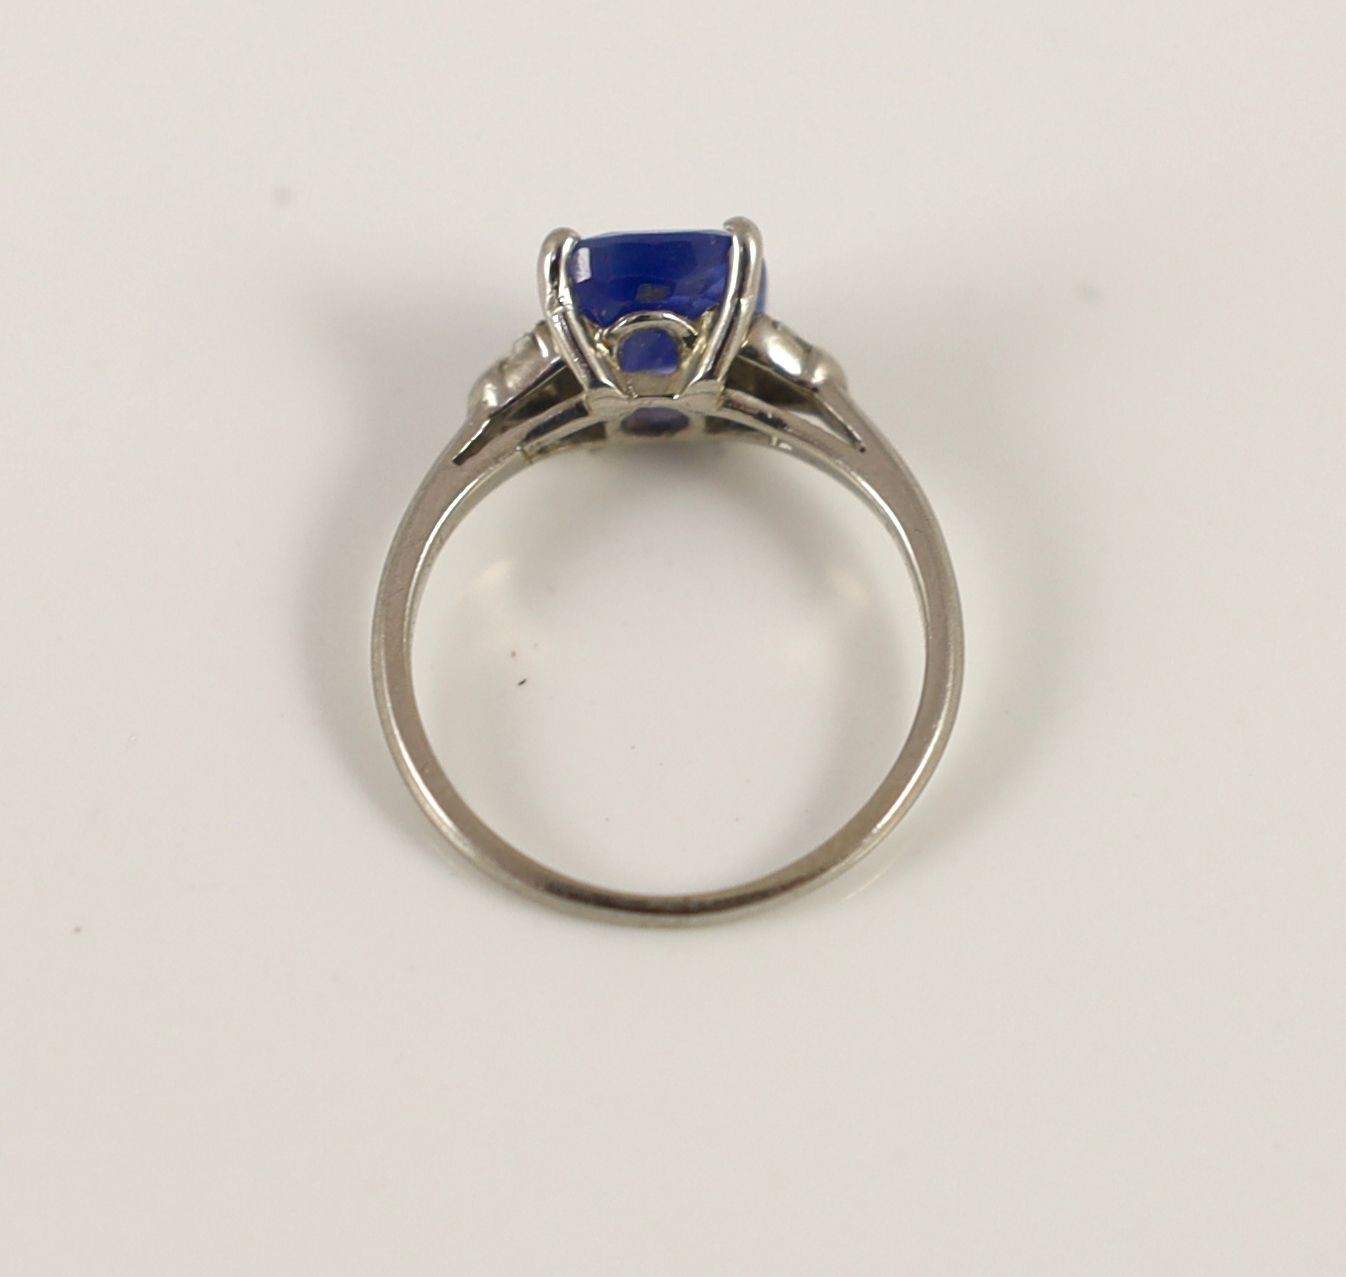 A platinum and palladium set single stone cushion cut sapphire ring, with triangular cut diamond set shoulders